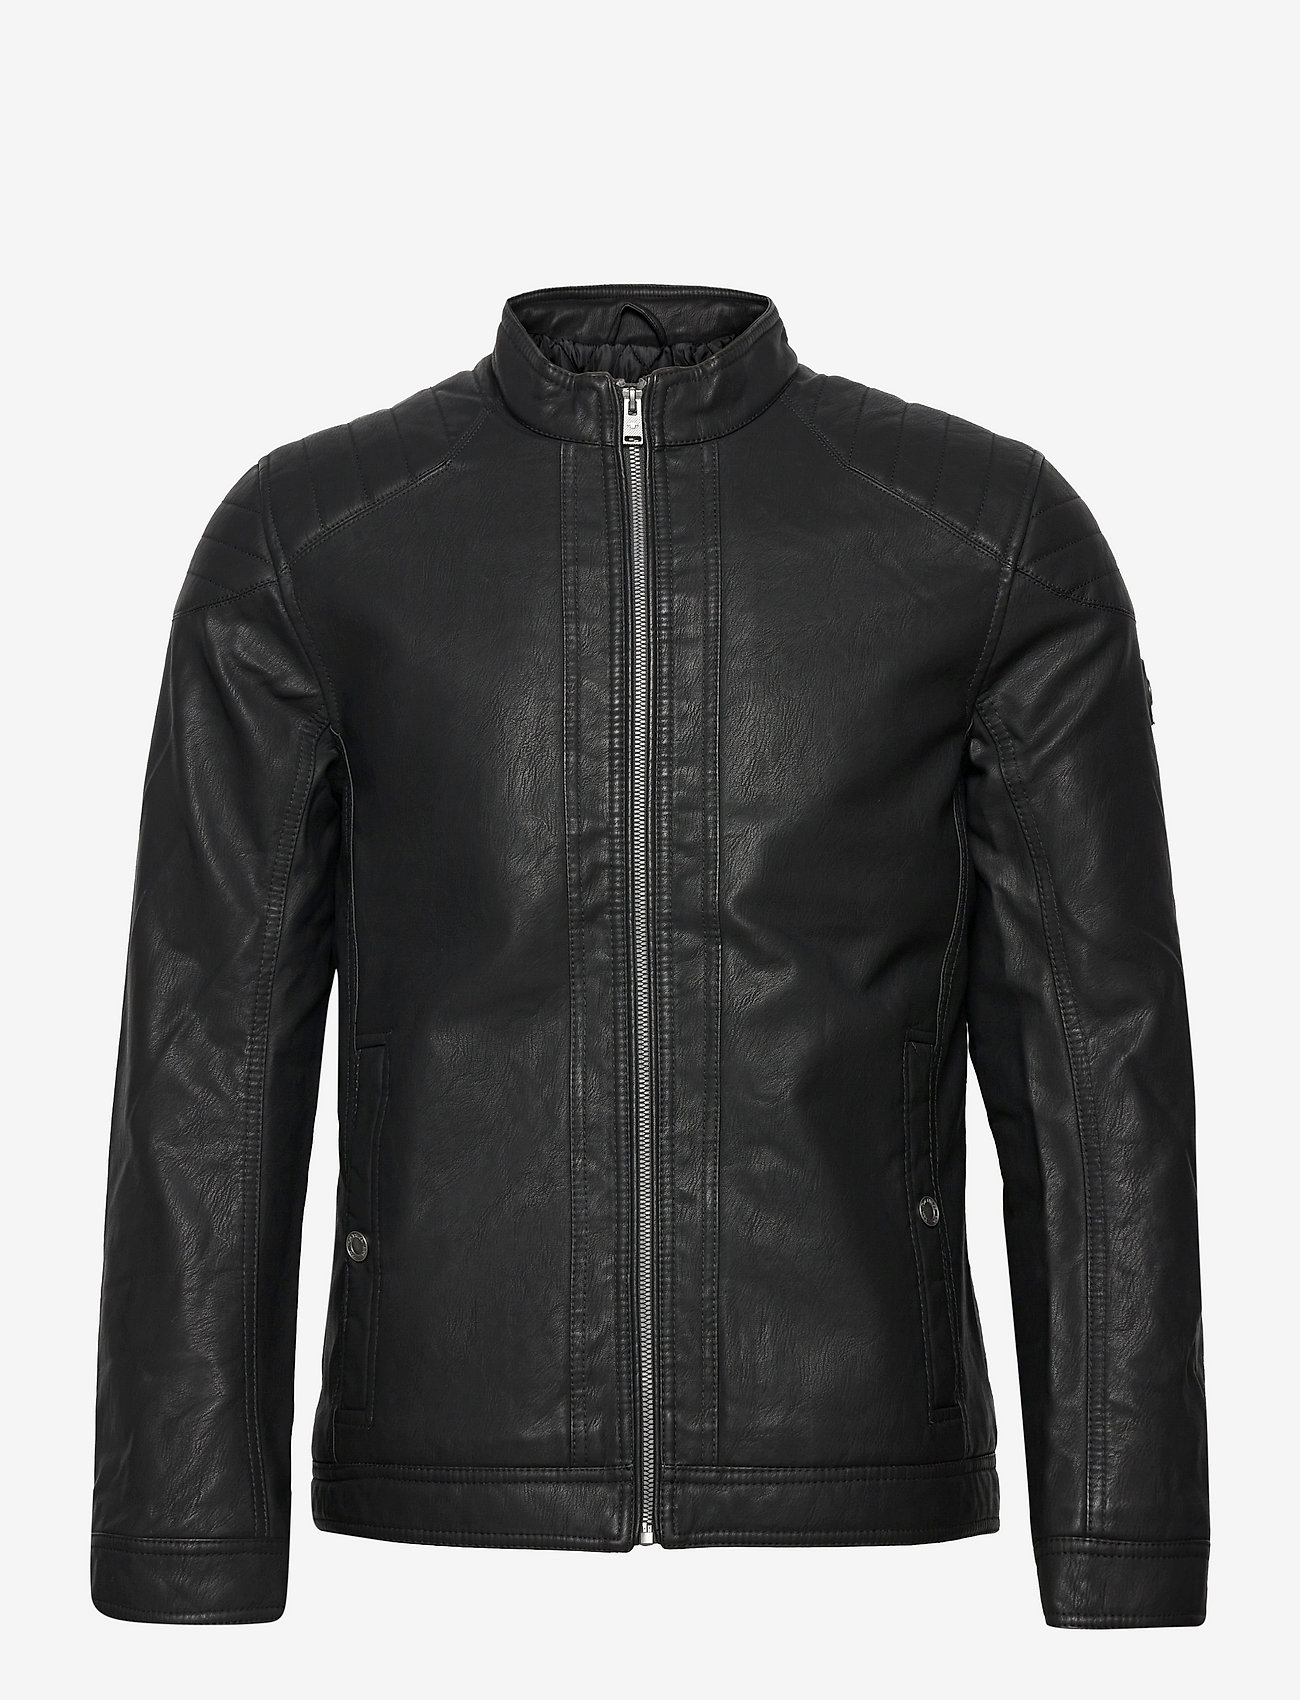 Tom Tailor - fake leather jacket - kurtki wiosenne - black - 1